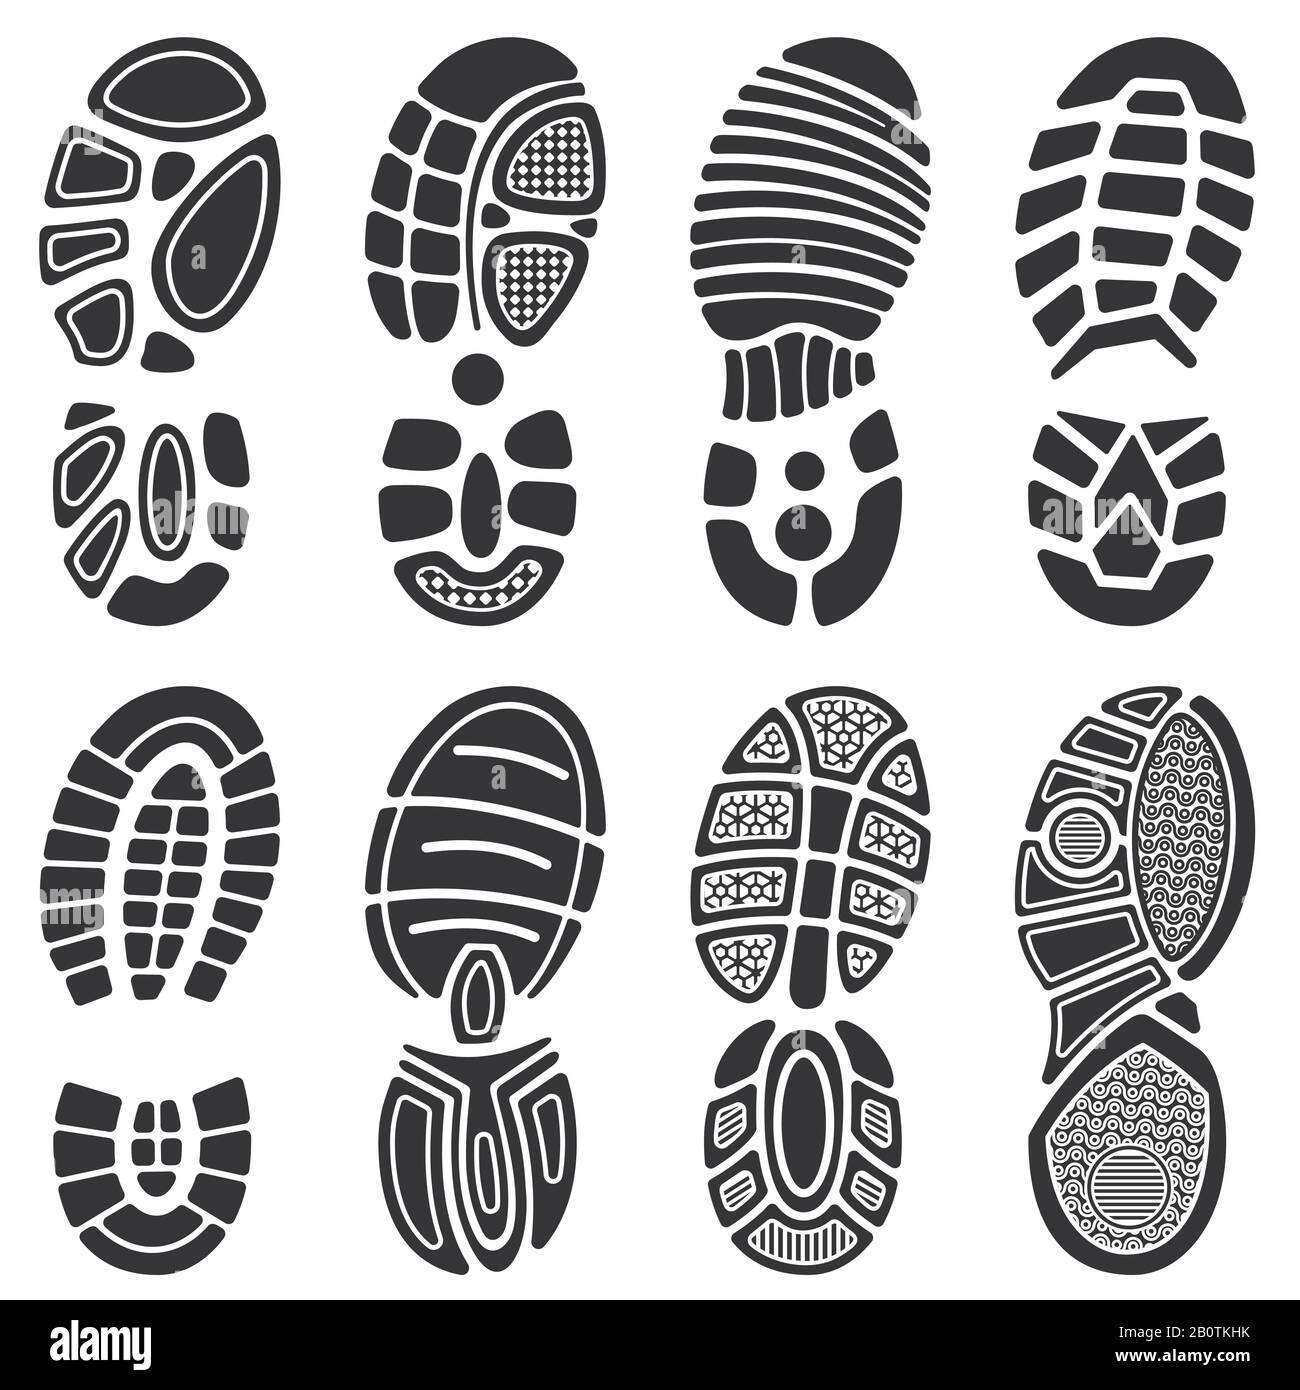 Set di footprint vettoriali per scarpe sportive da running. Silhouette con stampa suola, illustrazione della scarpa nera Illustrazione Vettoriale